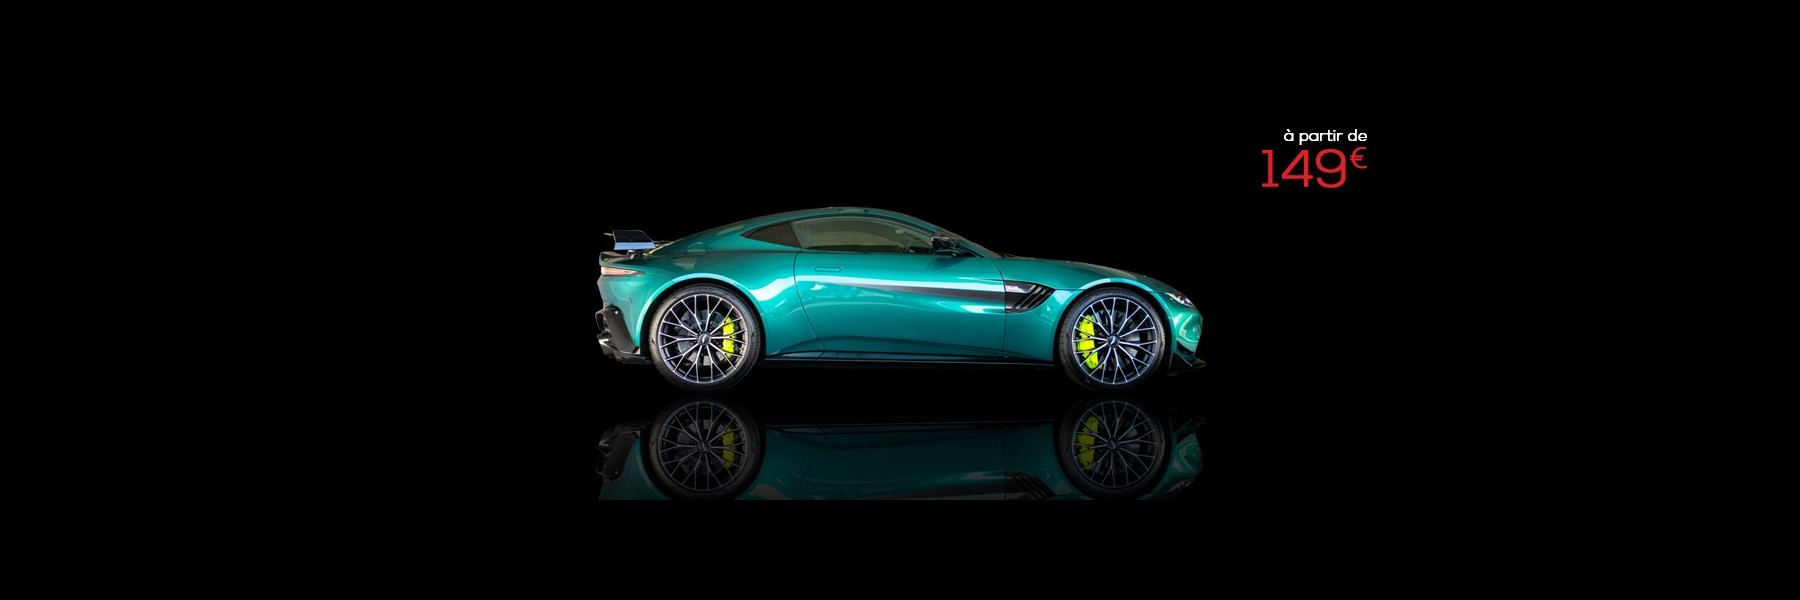 Aston Martin driving experience